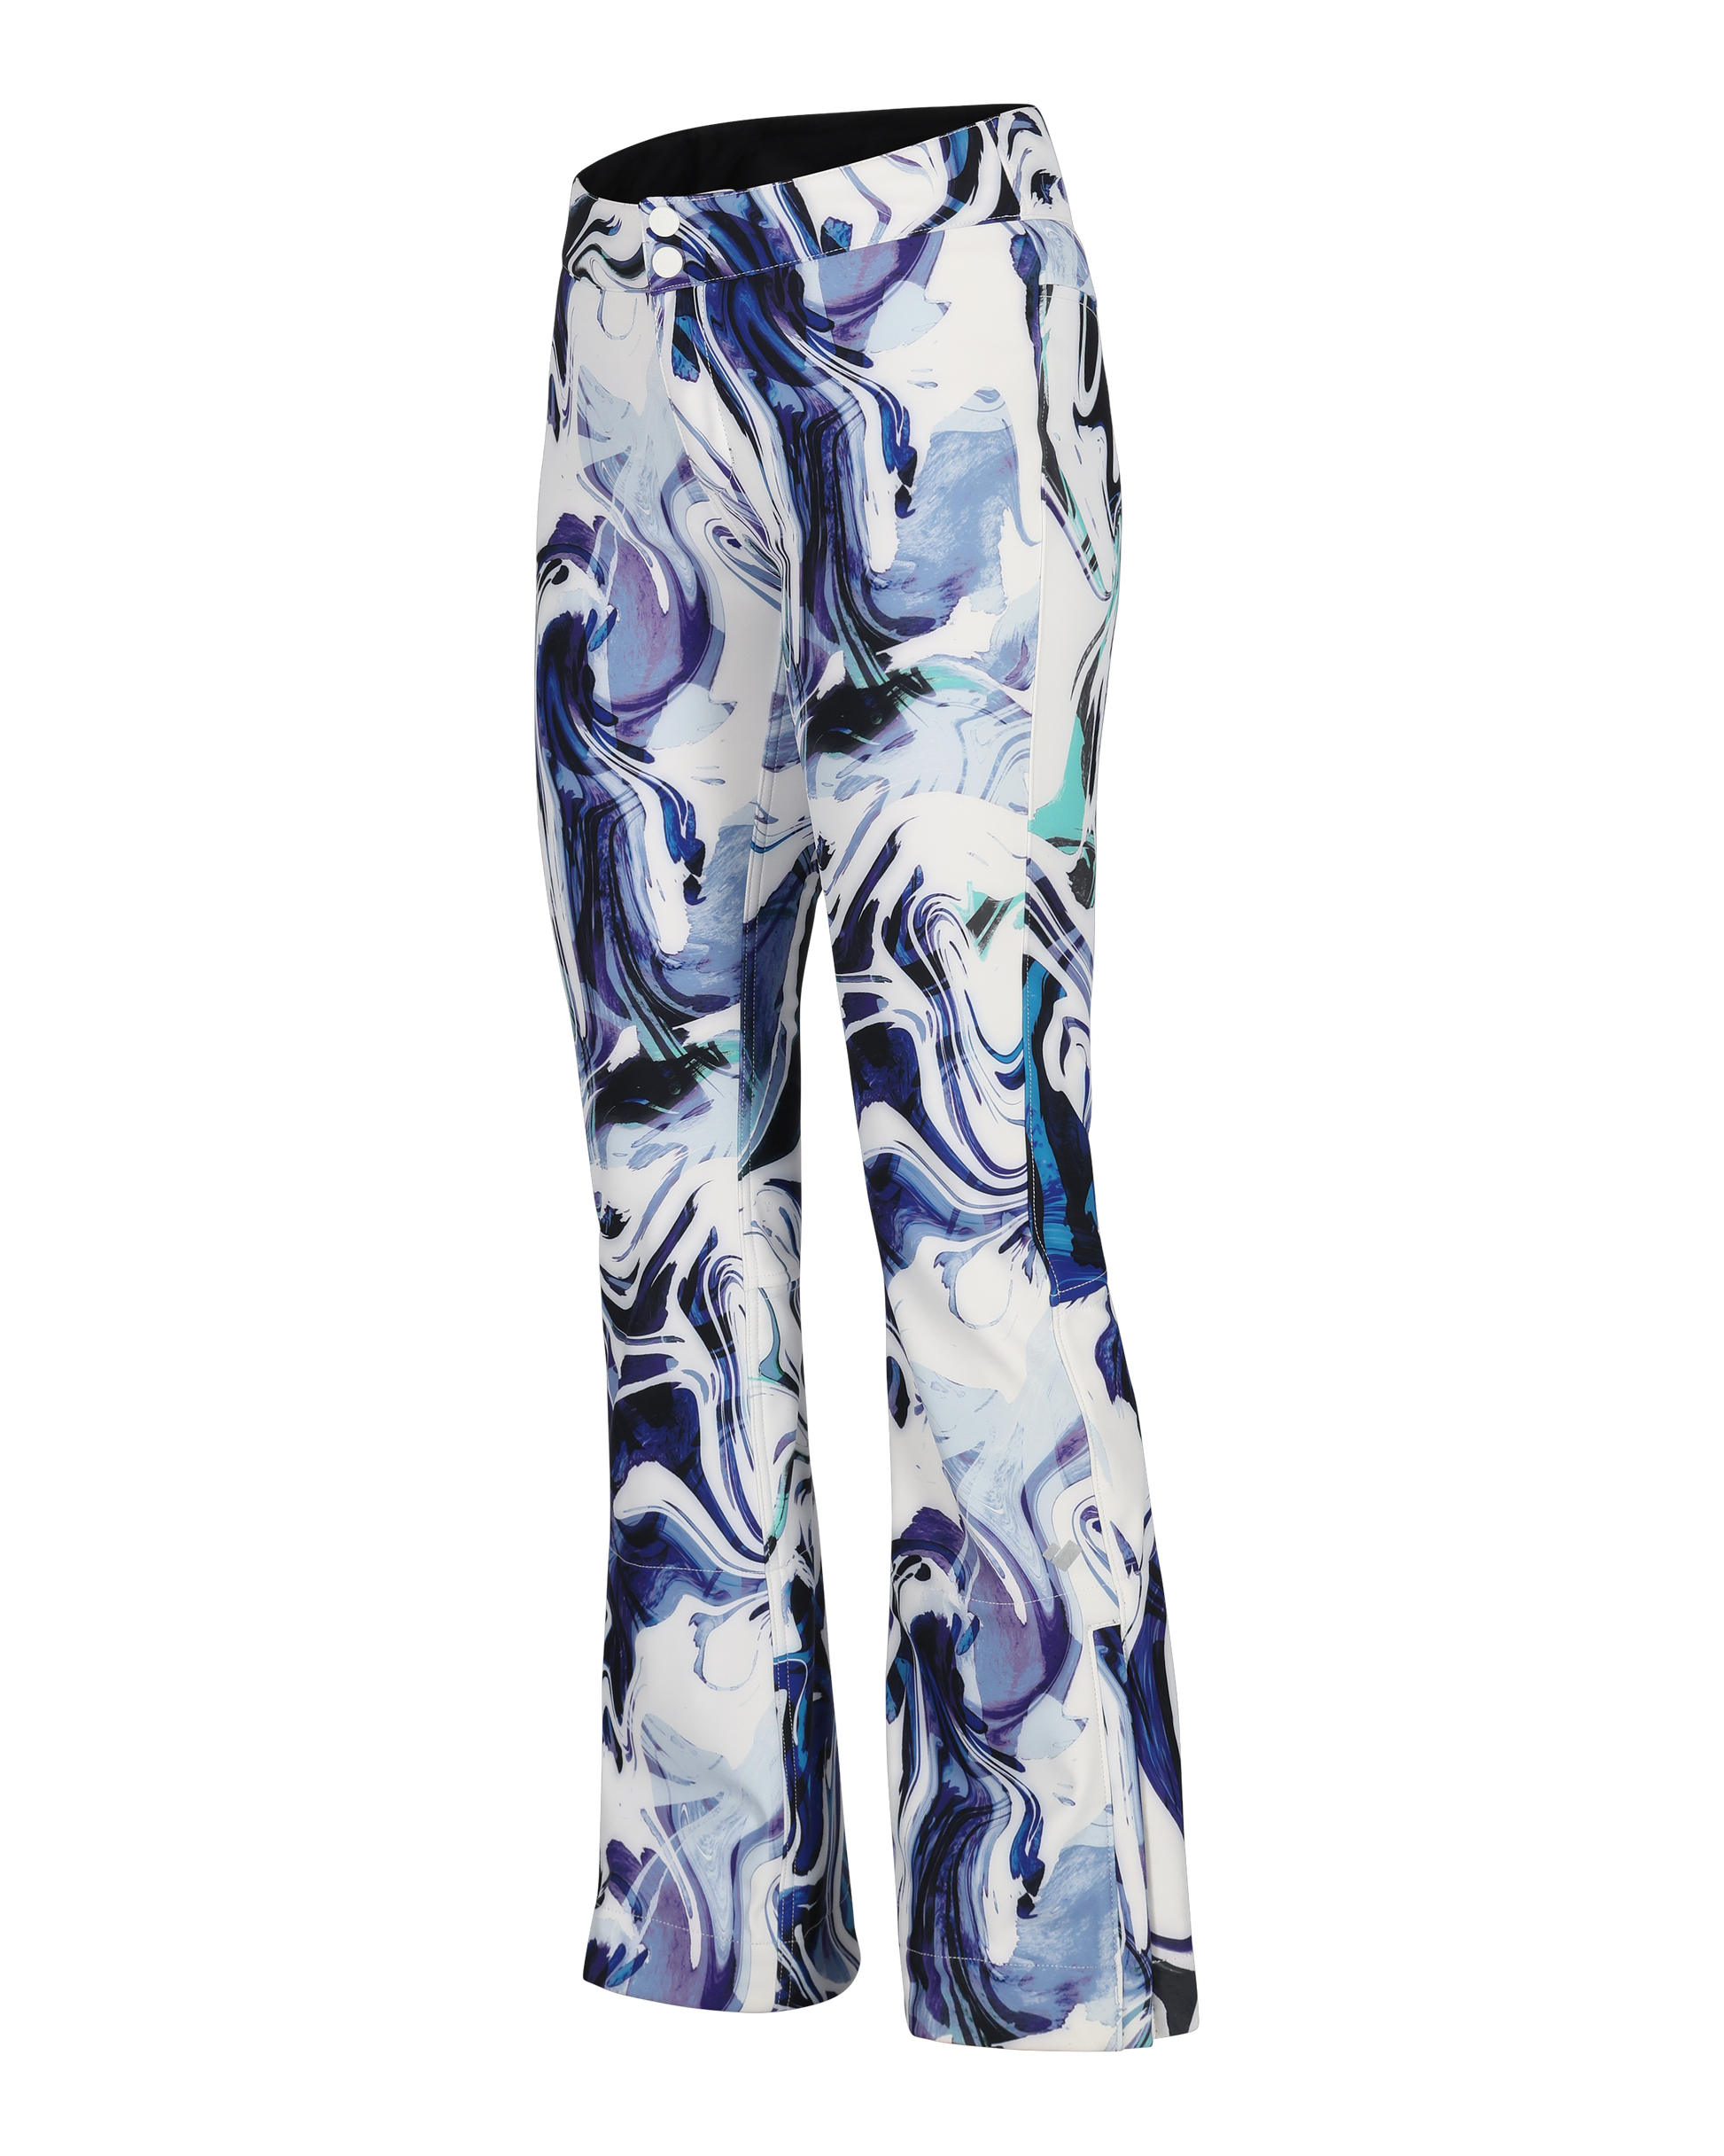 NWOT, Colsie Women's Foldover Elastic Waist Ski Print Pajama PJ